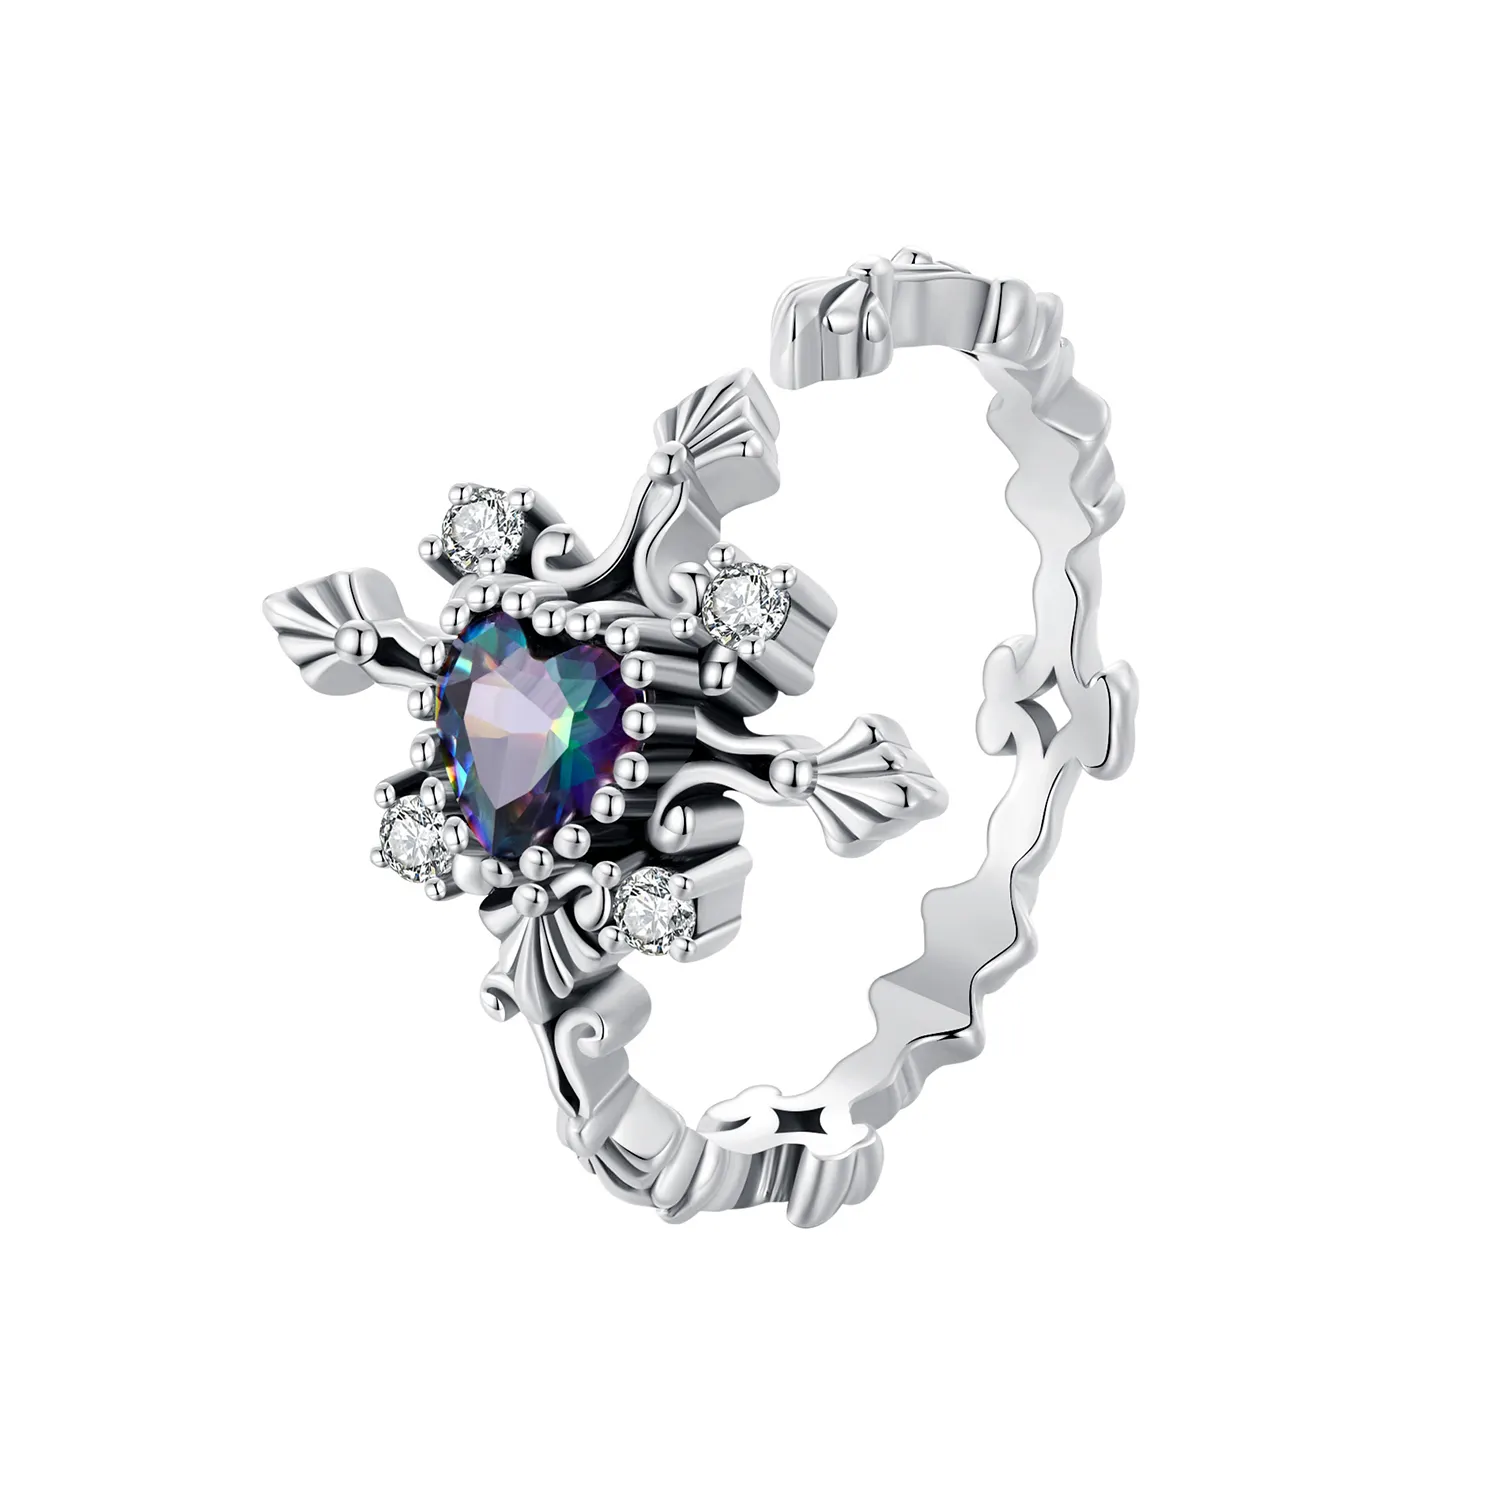 Anillo cruzado de Plata de Ley 925, anillo Floral Vintage de circonita de corazón colorido para mujer, regalo de fiesta de aniversario, joyería fina